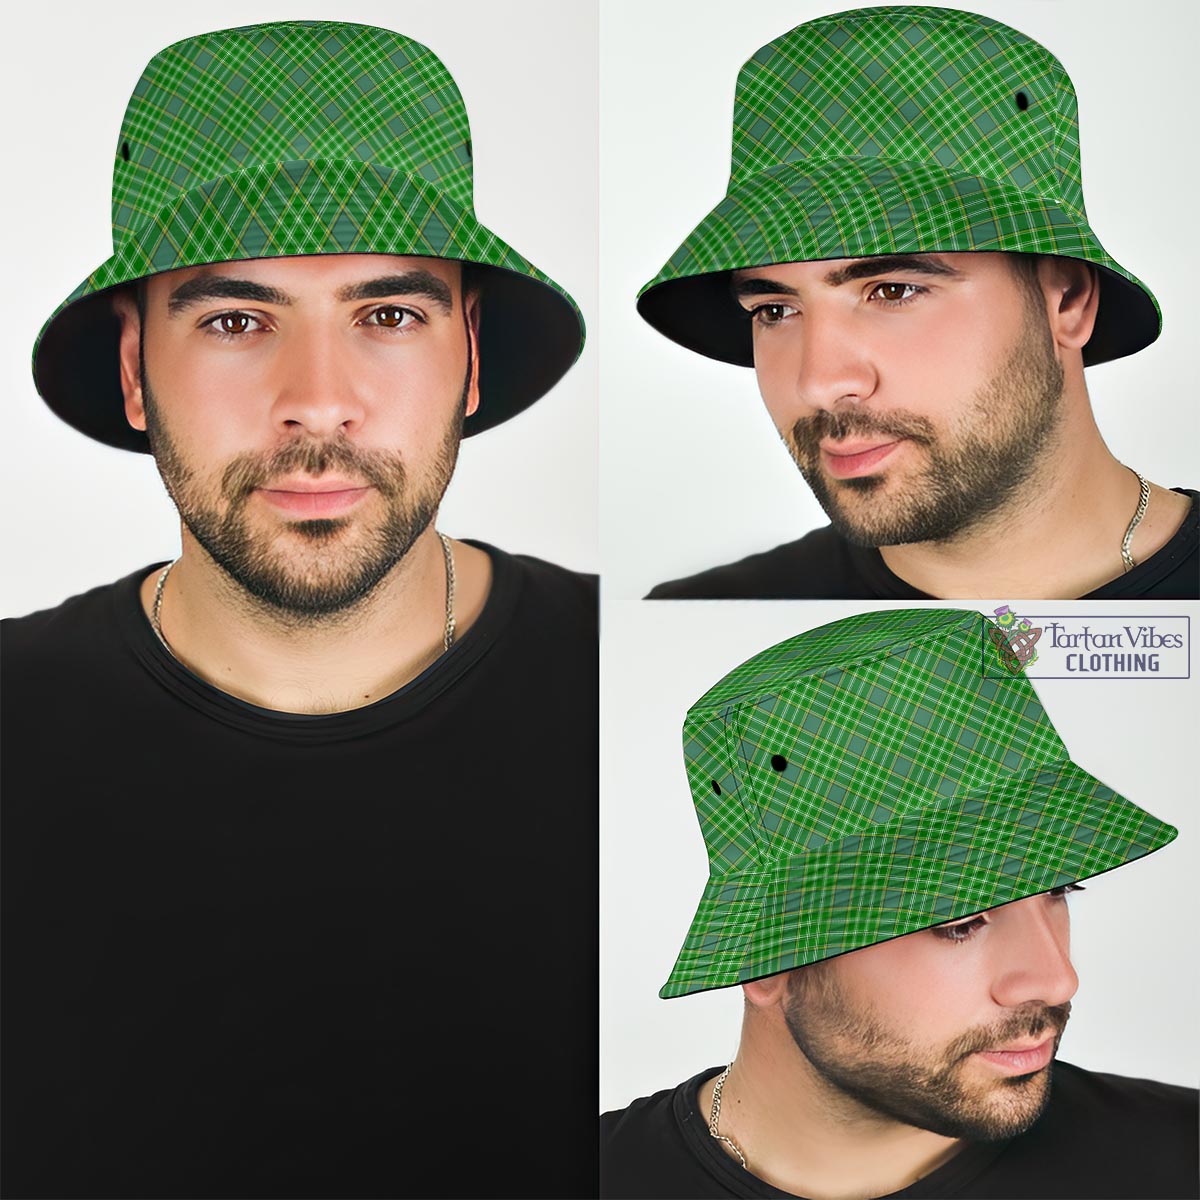 Tartan Vibes Clothing Currie Tartan Bucket Hat